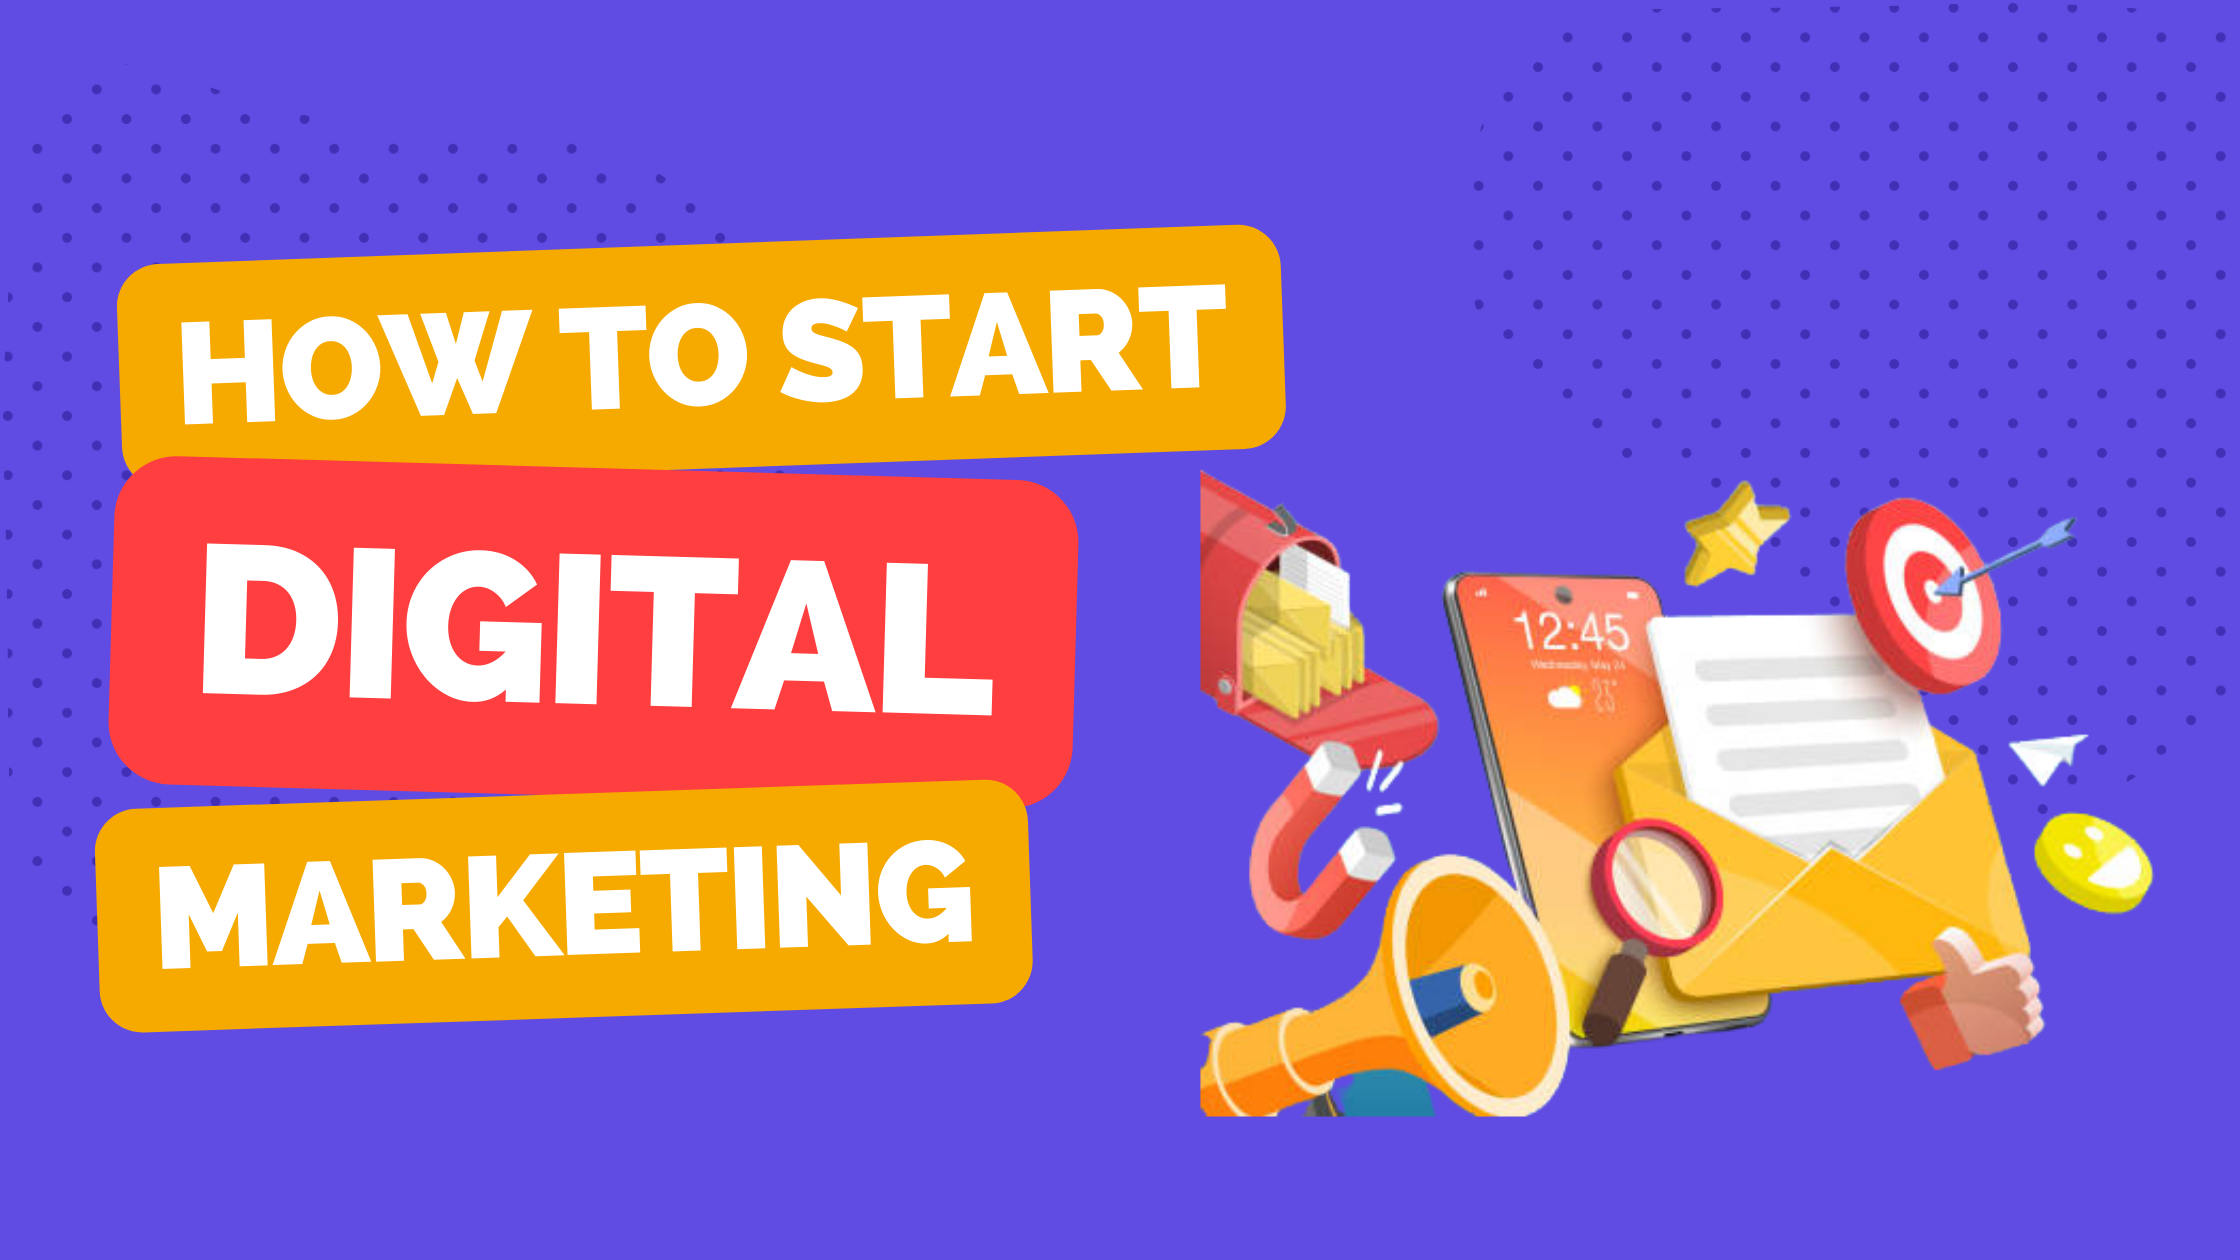 How To Start Digital Marketing in Nigeria